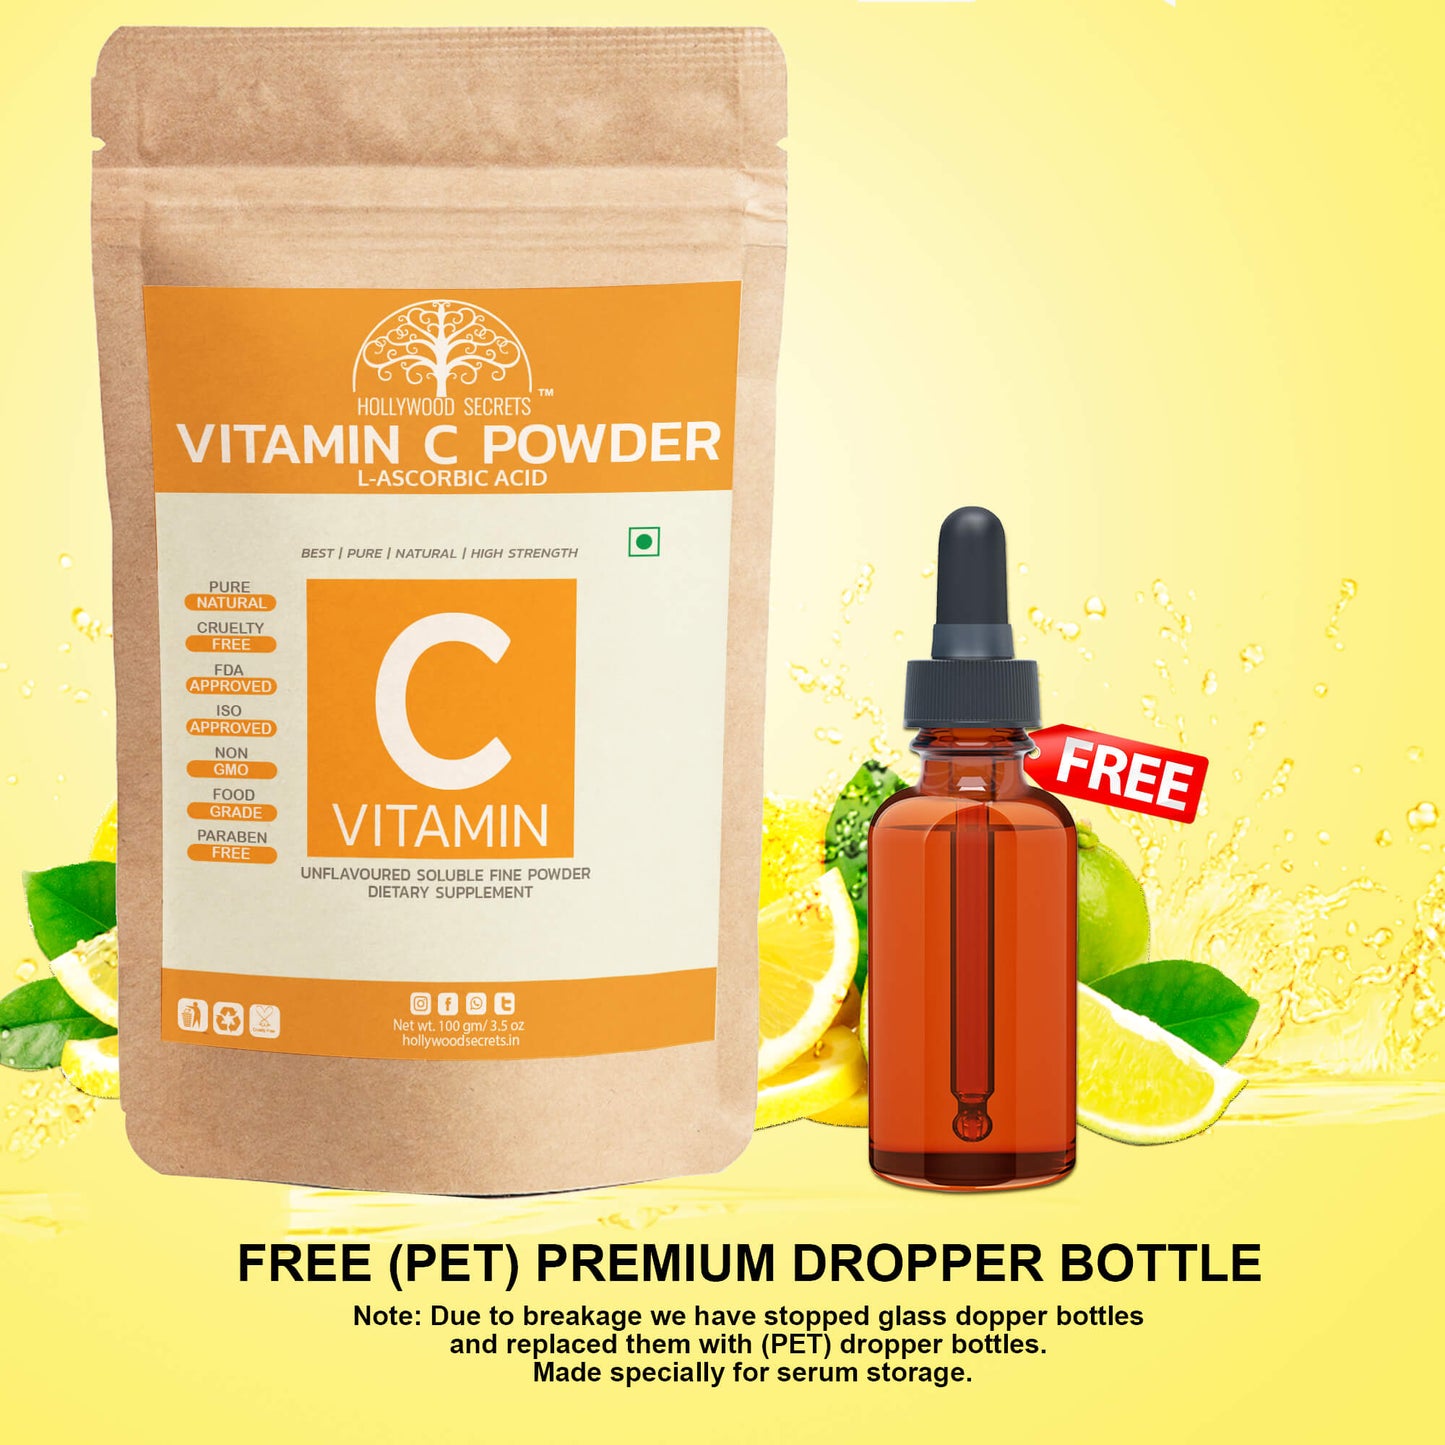 Vitamin C L-Ascorbic Powder 100gm Hollywood Secrets